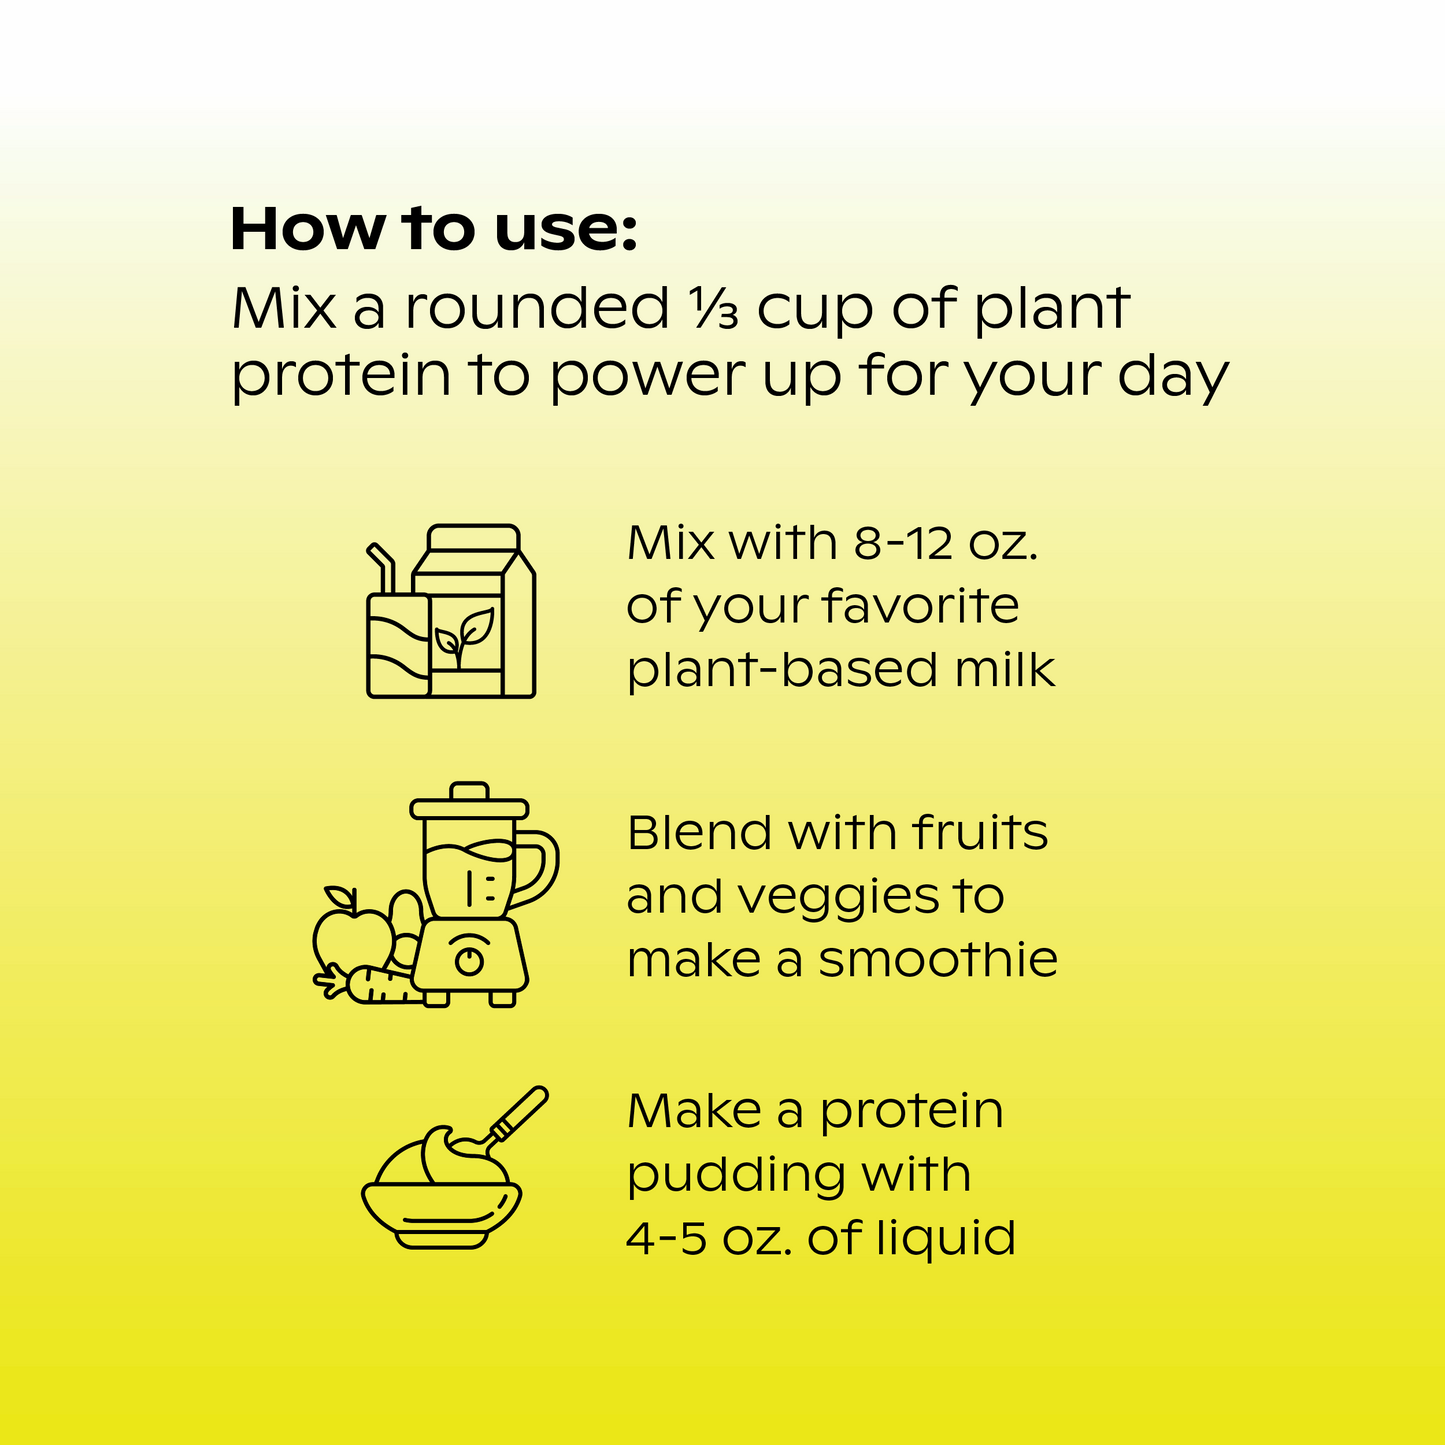 Organic Plant Protein + Prebiotics Creamy Cacao Sample Pack